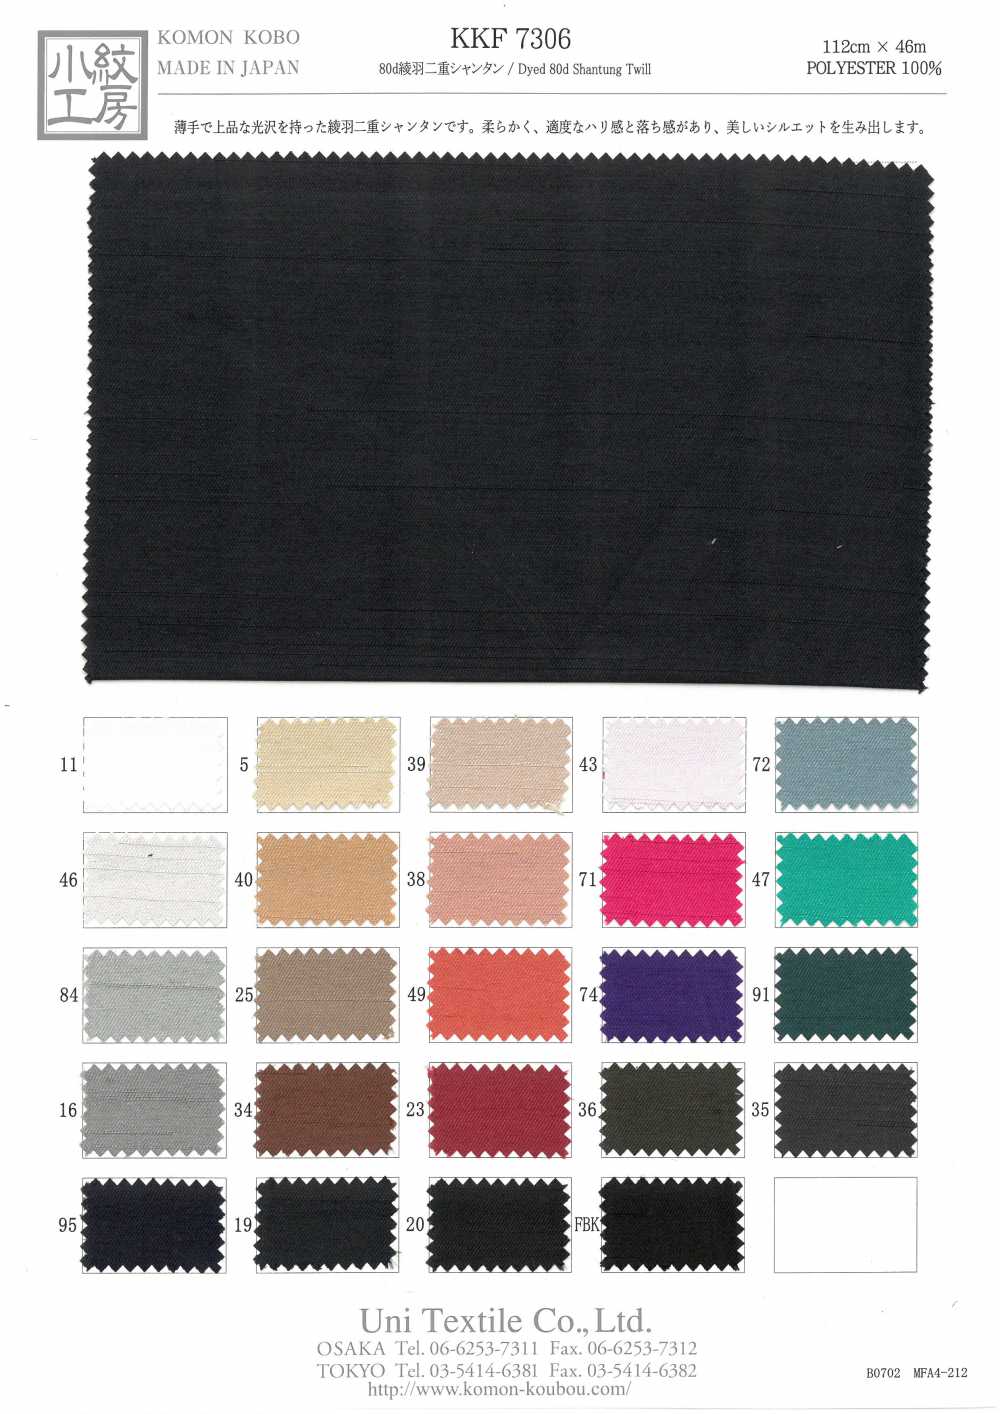 KKF7306 80d Twill Habutae Habutai Shantung[Textilgewebe] Uni Textile